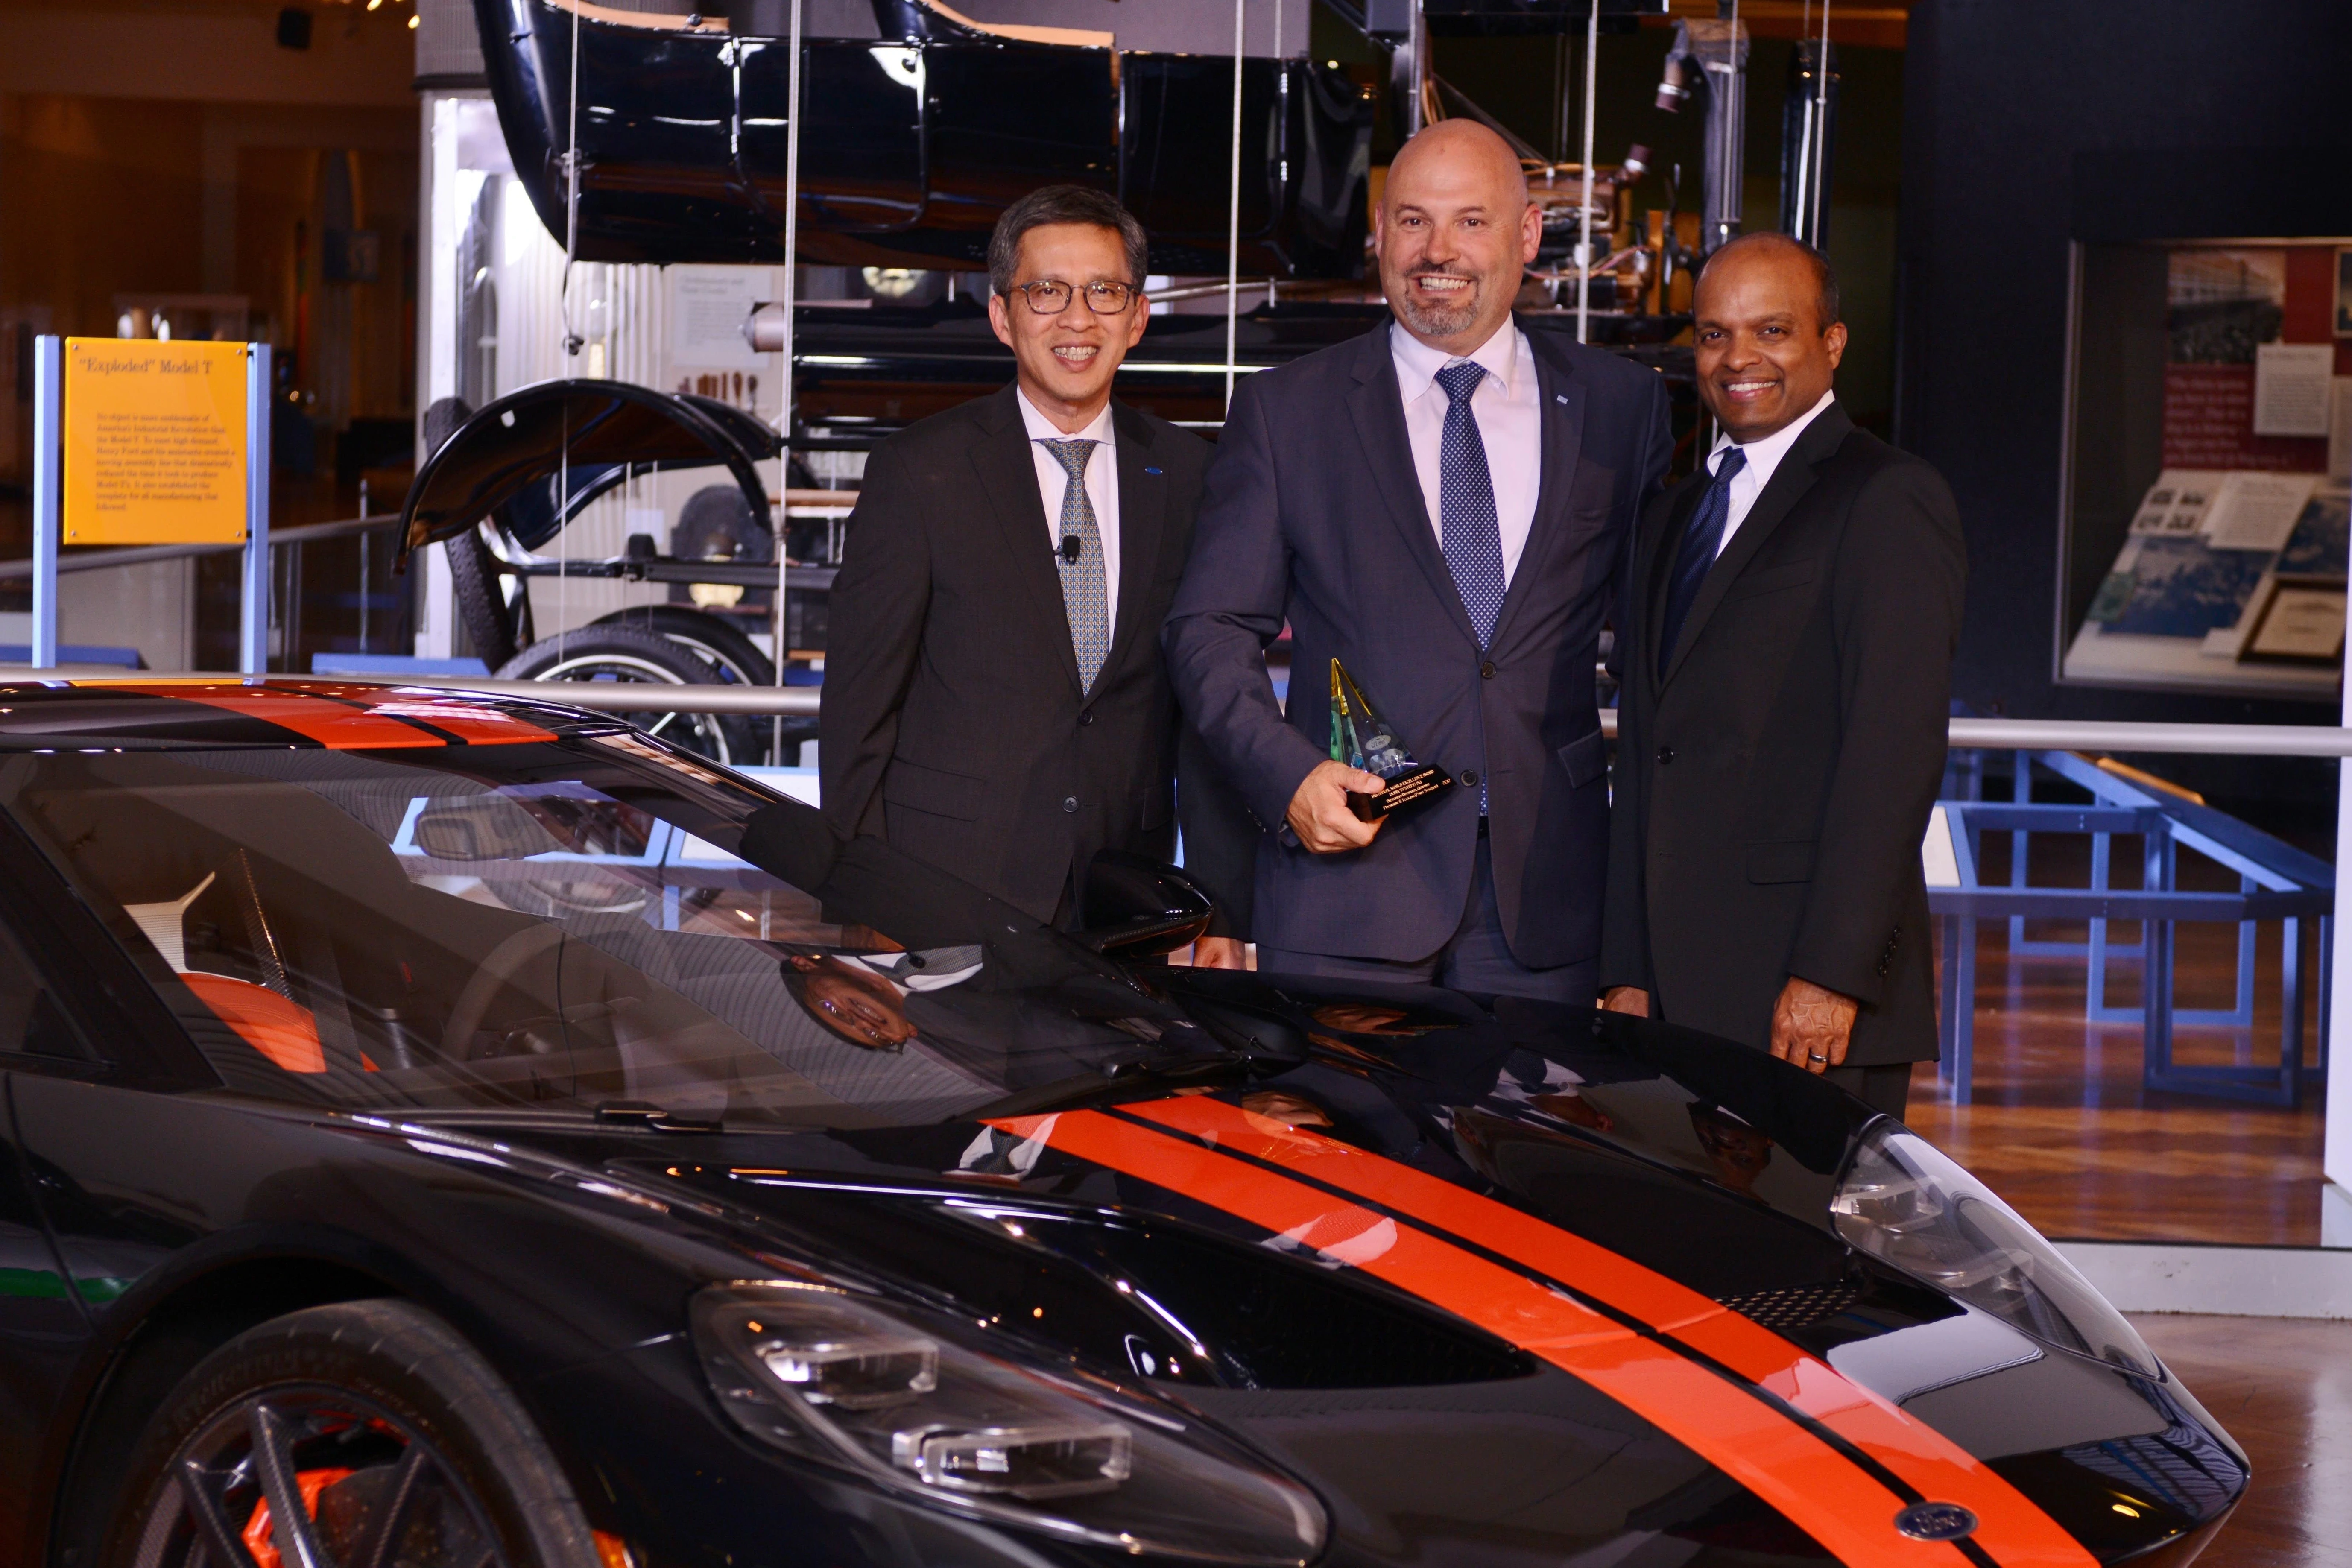 Dürr receives Ford World Excellence Award